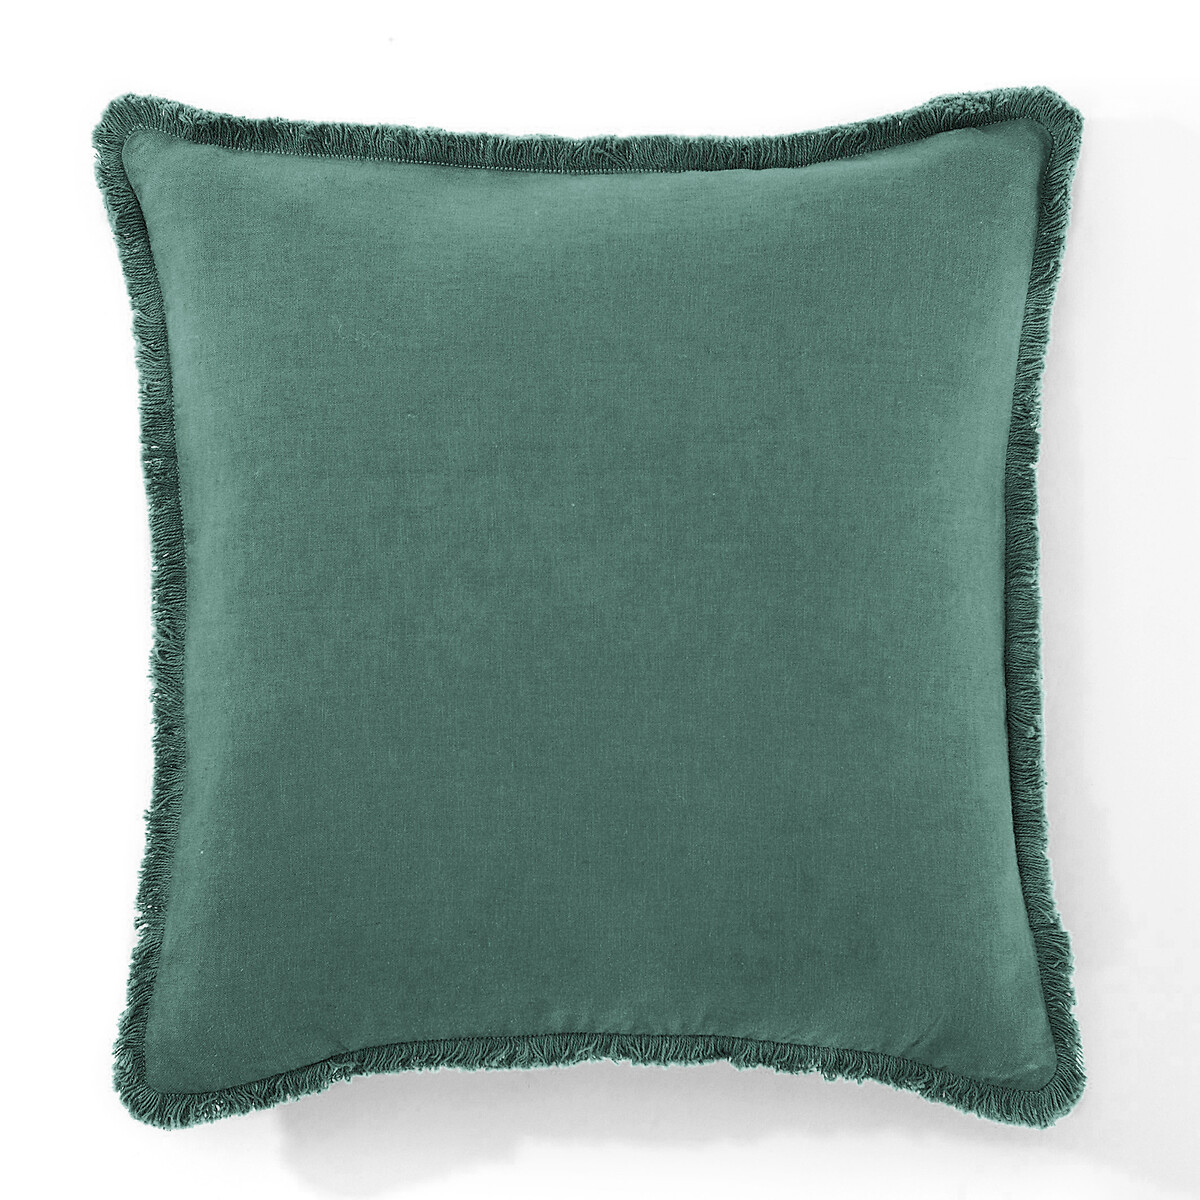 Чехол LA REDOUTE INTERIEURS На подушку из льнавискозы  ODORIE 40 x 40 см зеленый, размер 40 x 40 см - фото 1